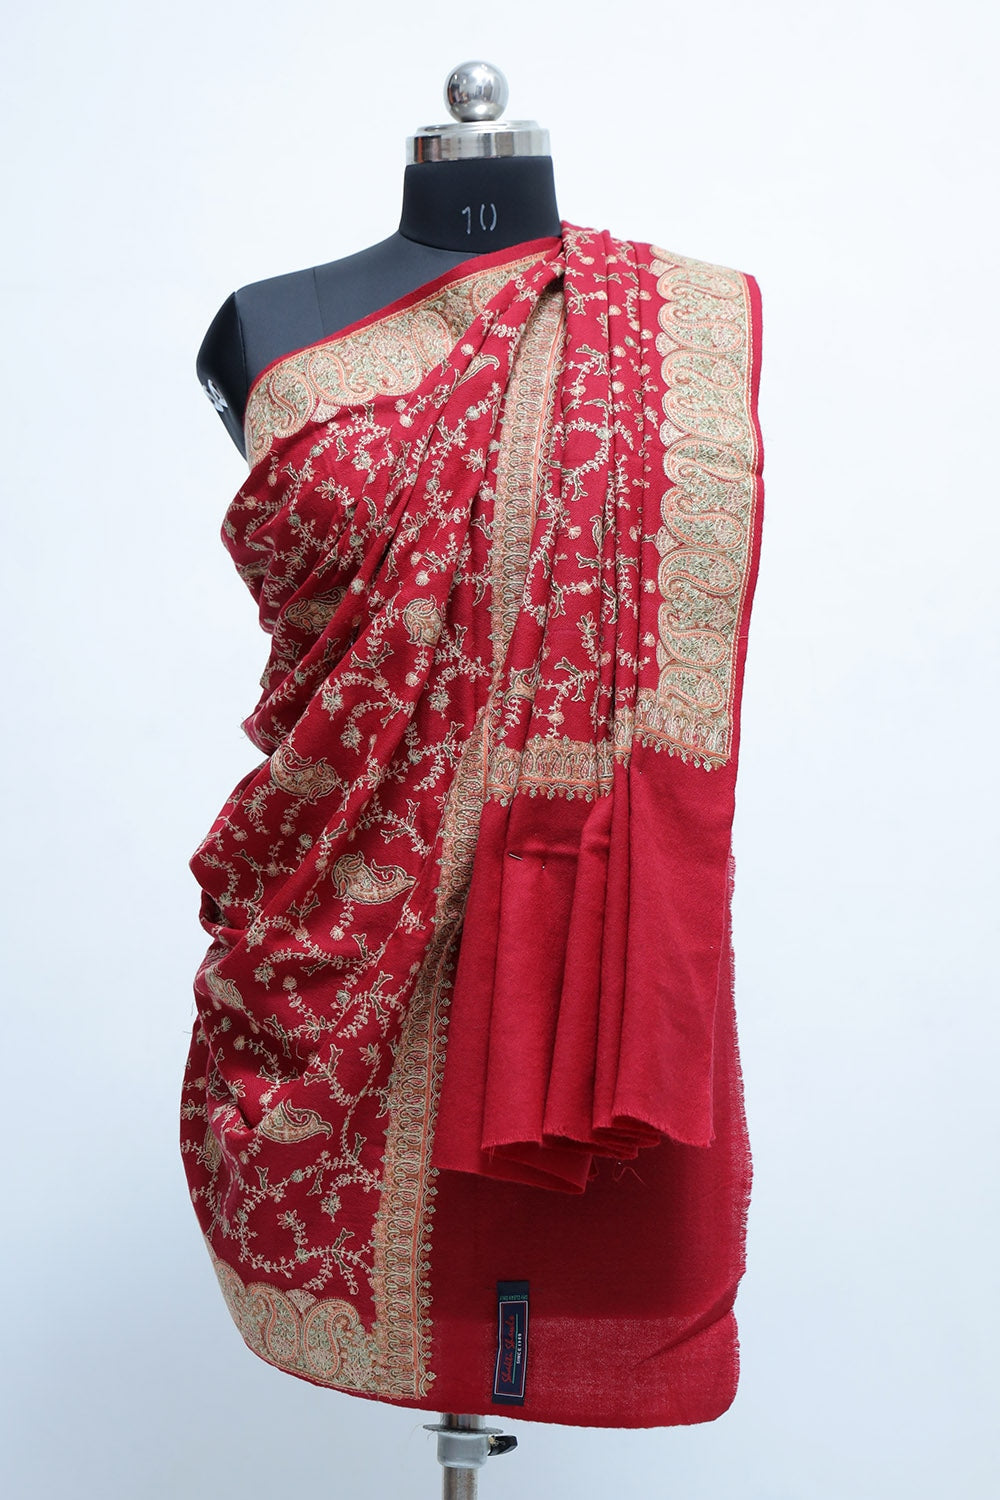 Ravishing Red Colour Sozni Shawl With Beautiful All over